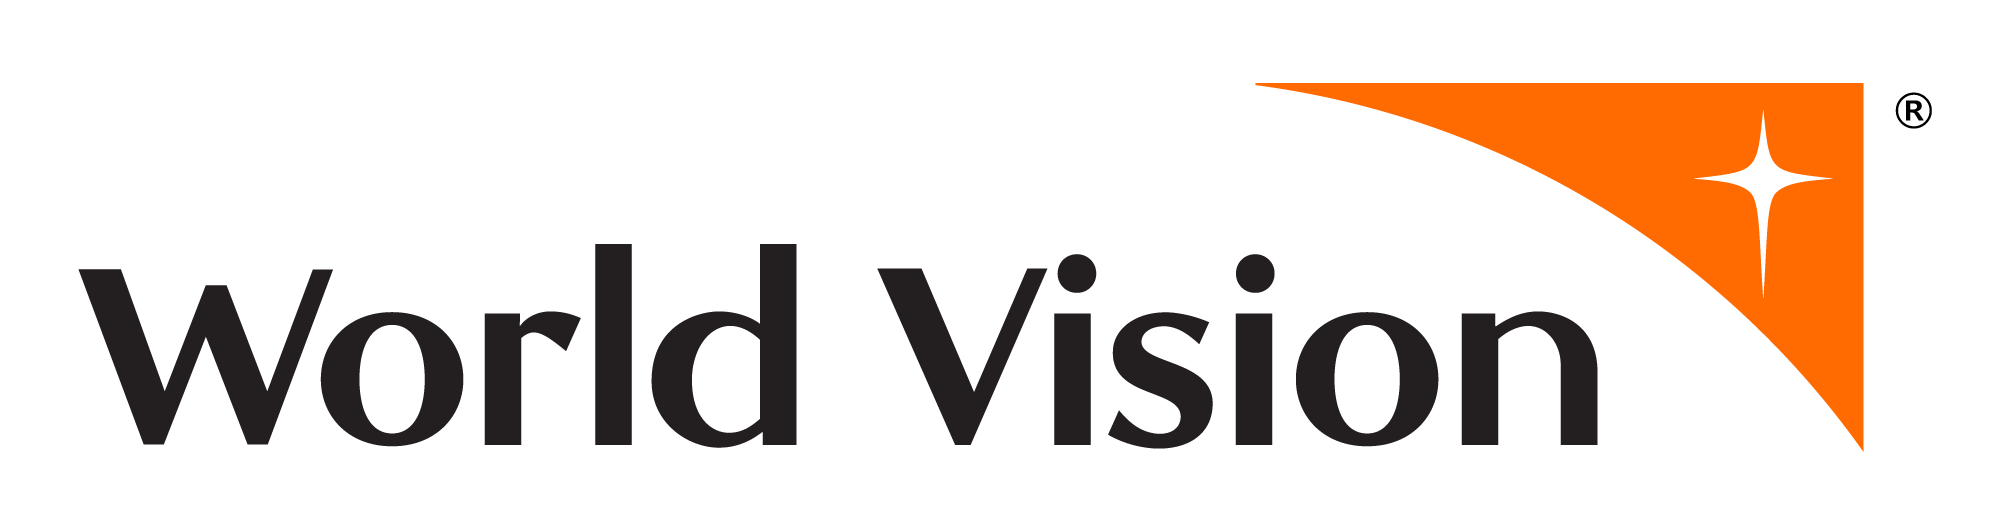 World Vision Canada Logo